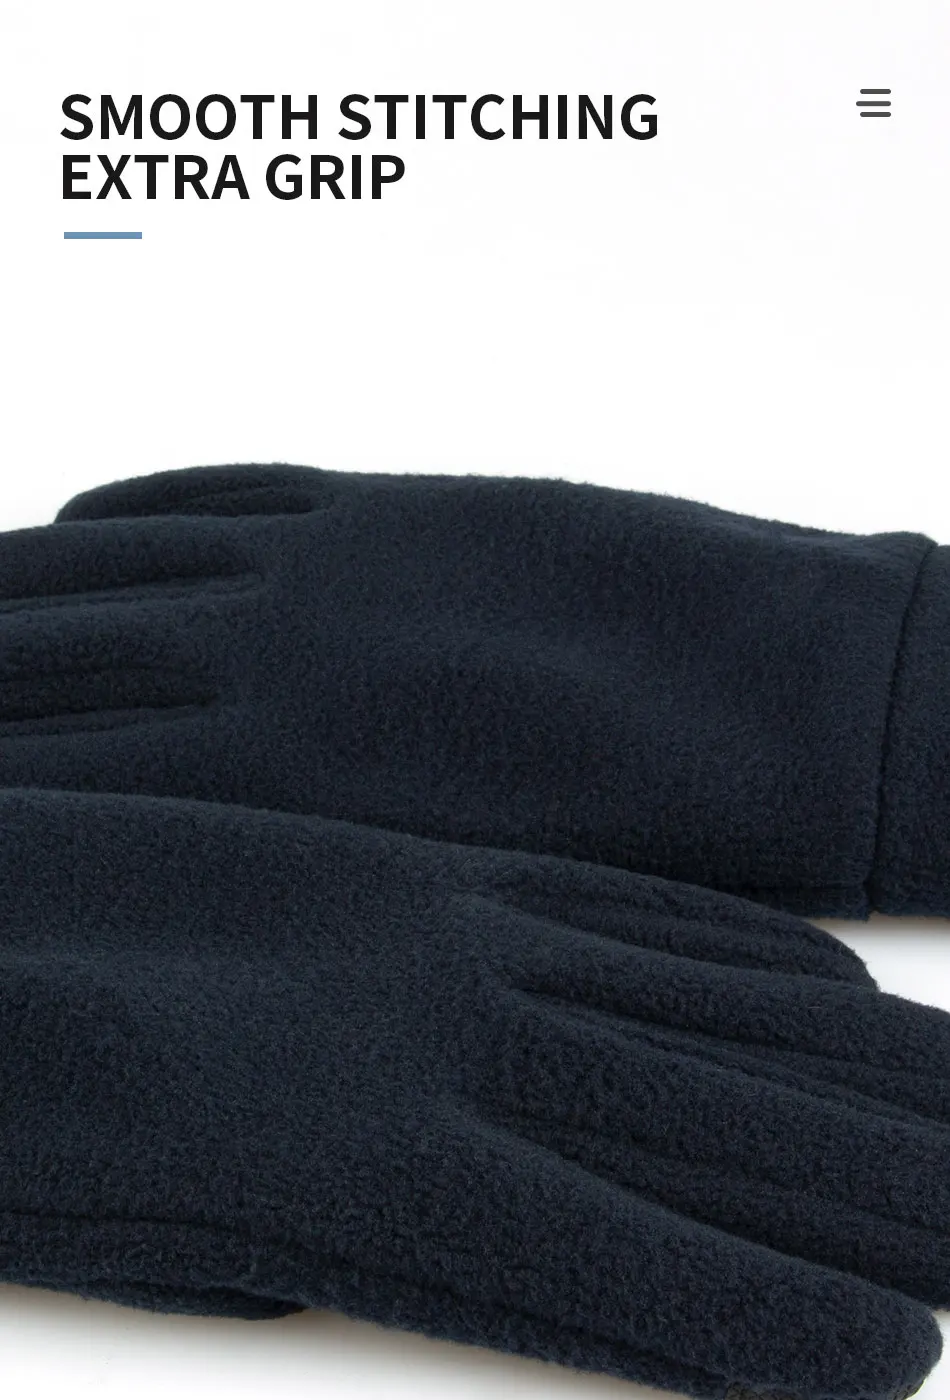 Ozero Warm Winter Gloves Polar Fleece Cold Weather Gloves Touch Screen ...